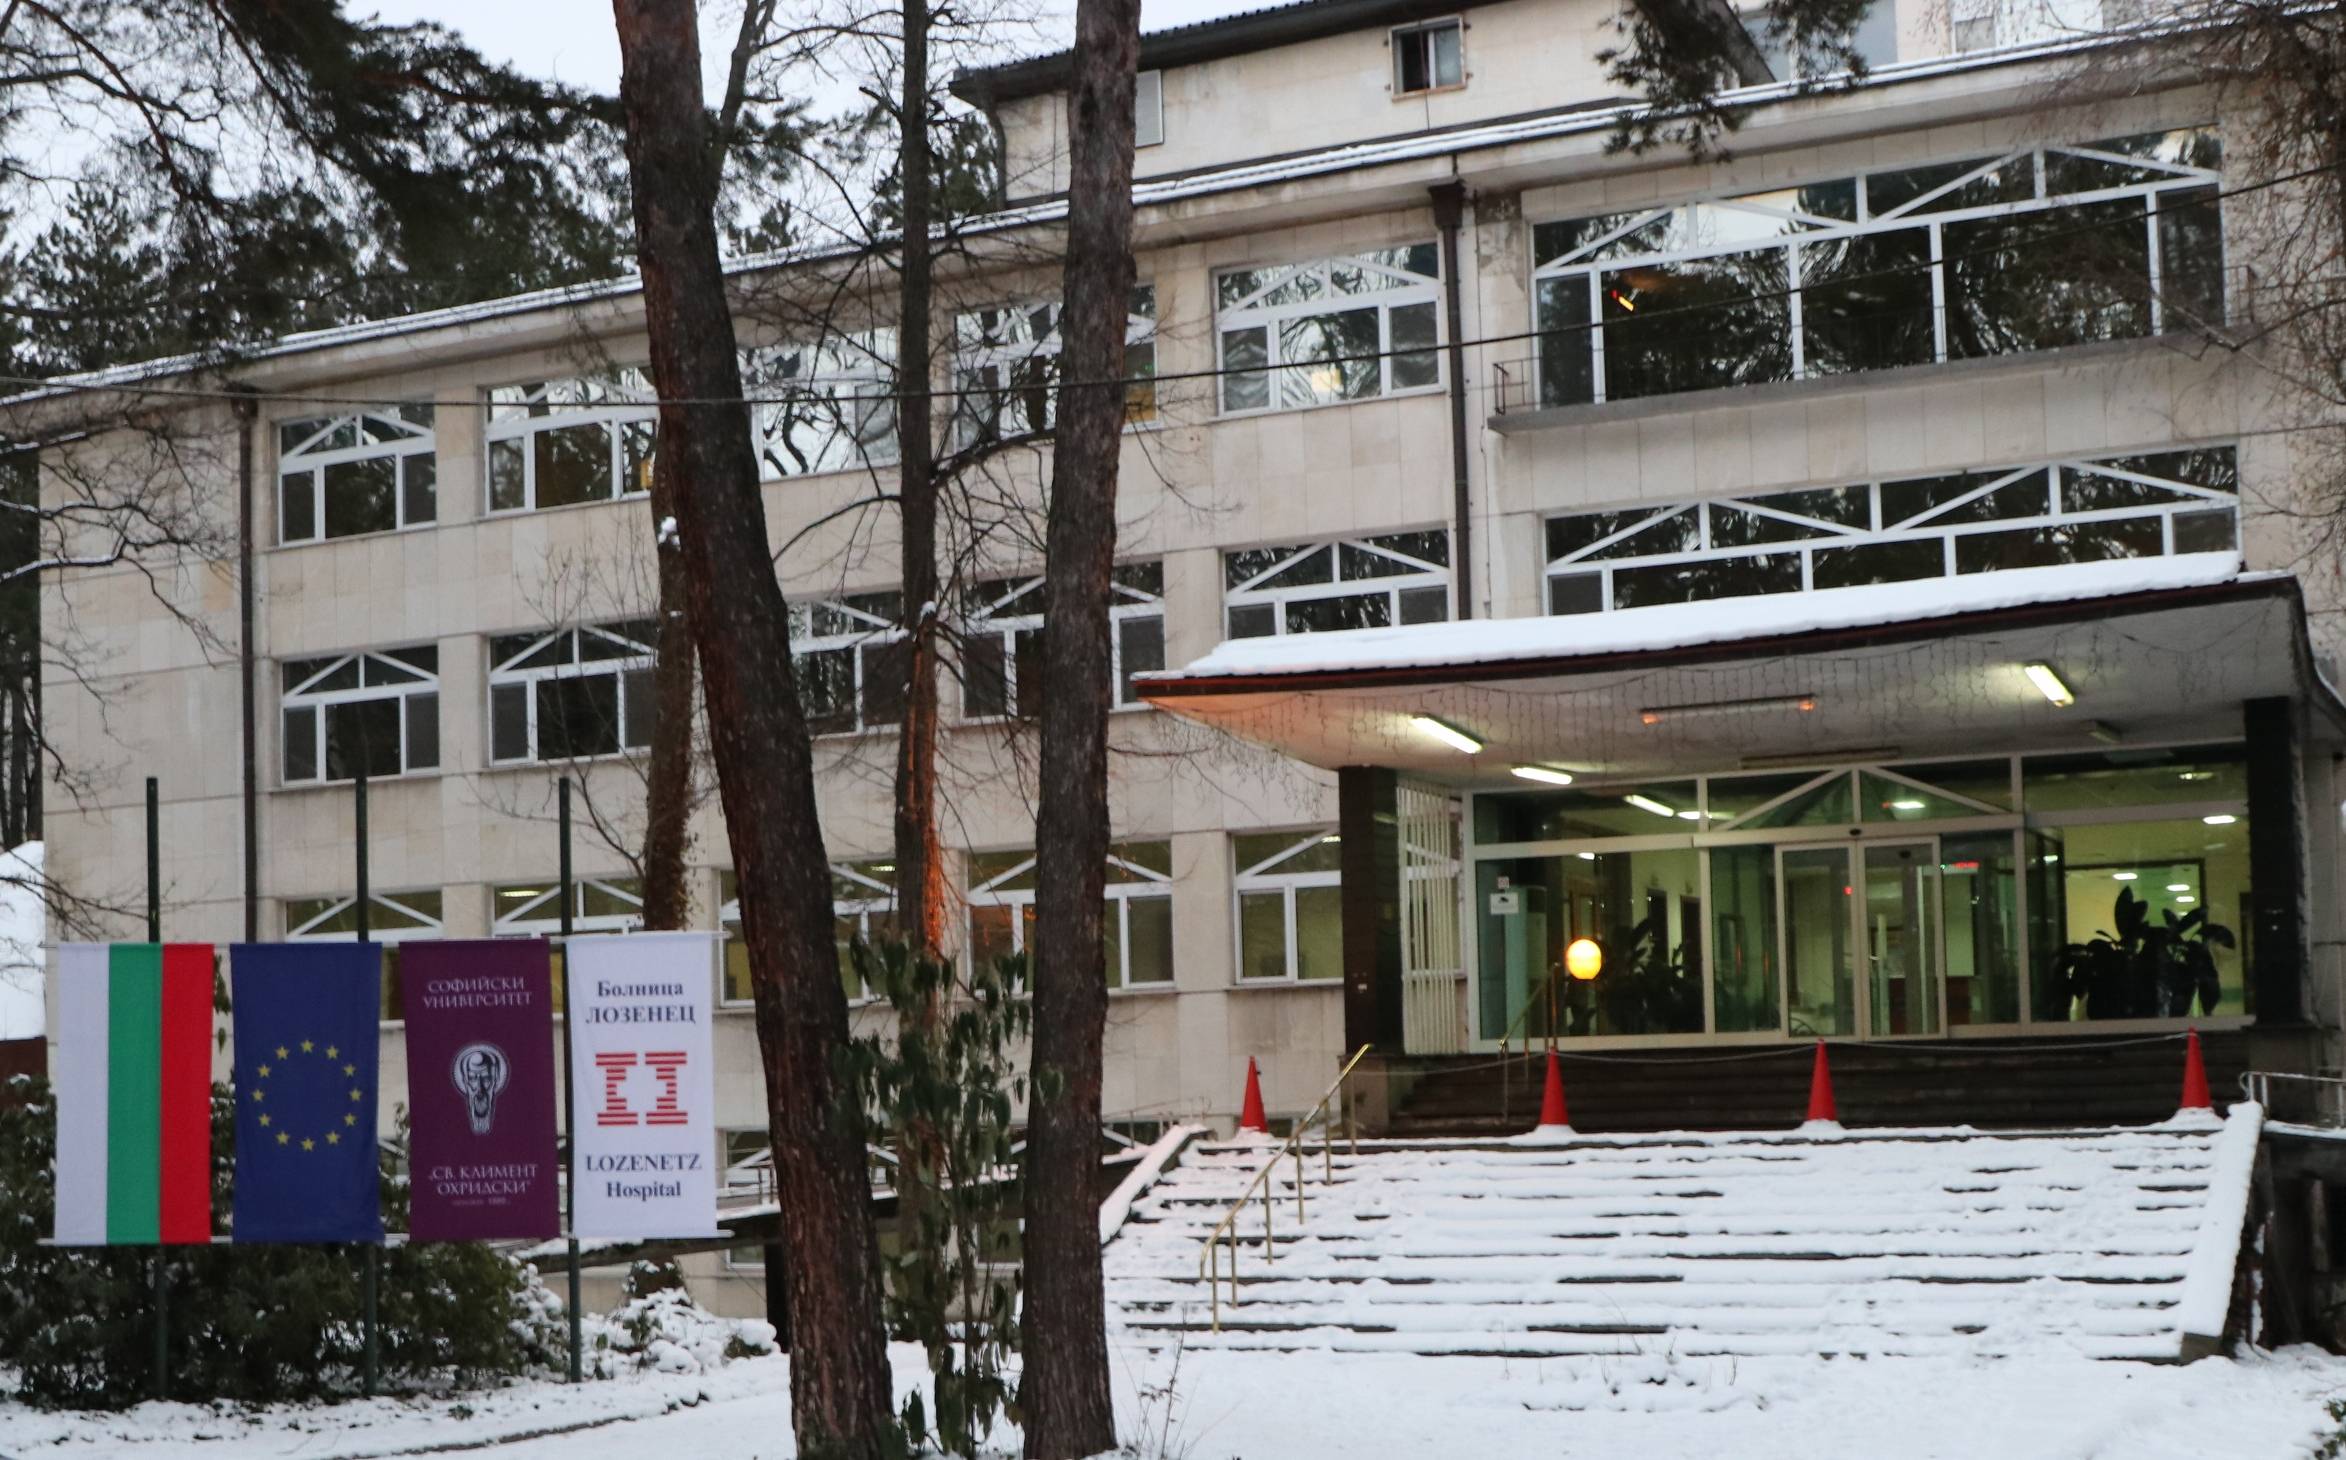 Болница Лозенец